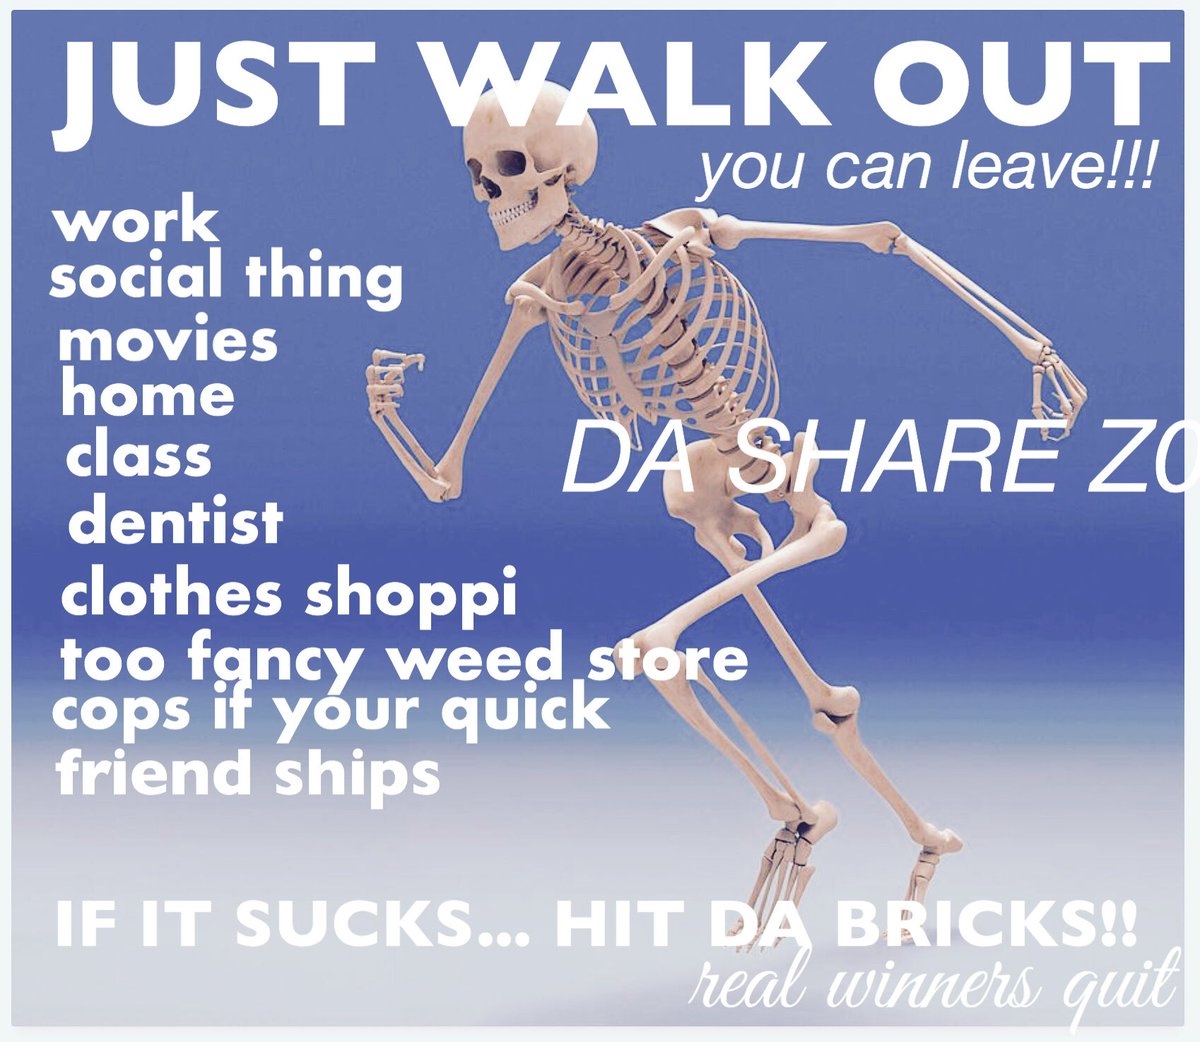 Meme image of a skeleton saying "JUST WALK OUT" and "IF IT SUCKS... HIT DA BRICKS!!"